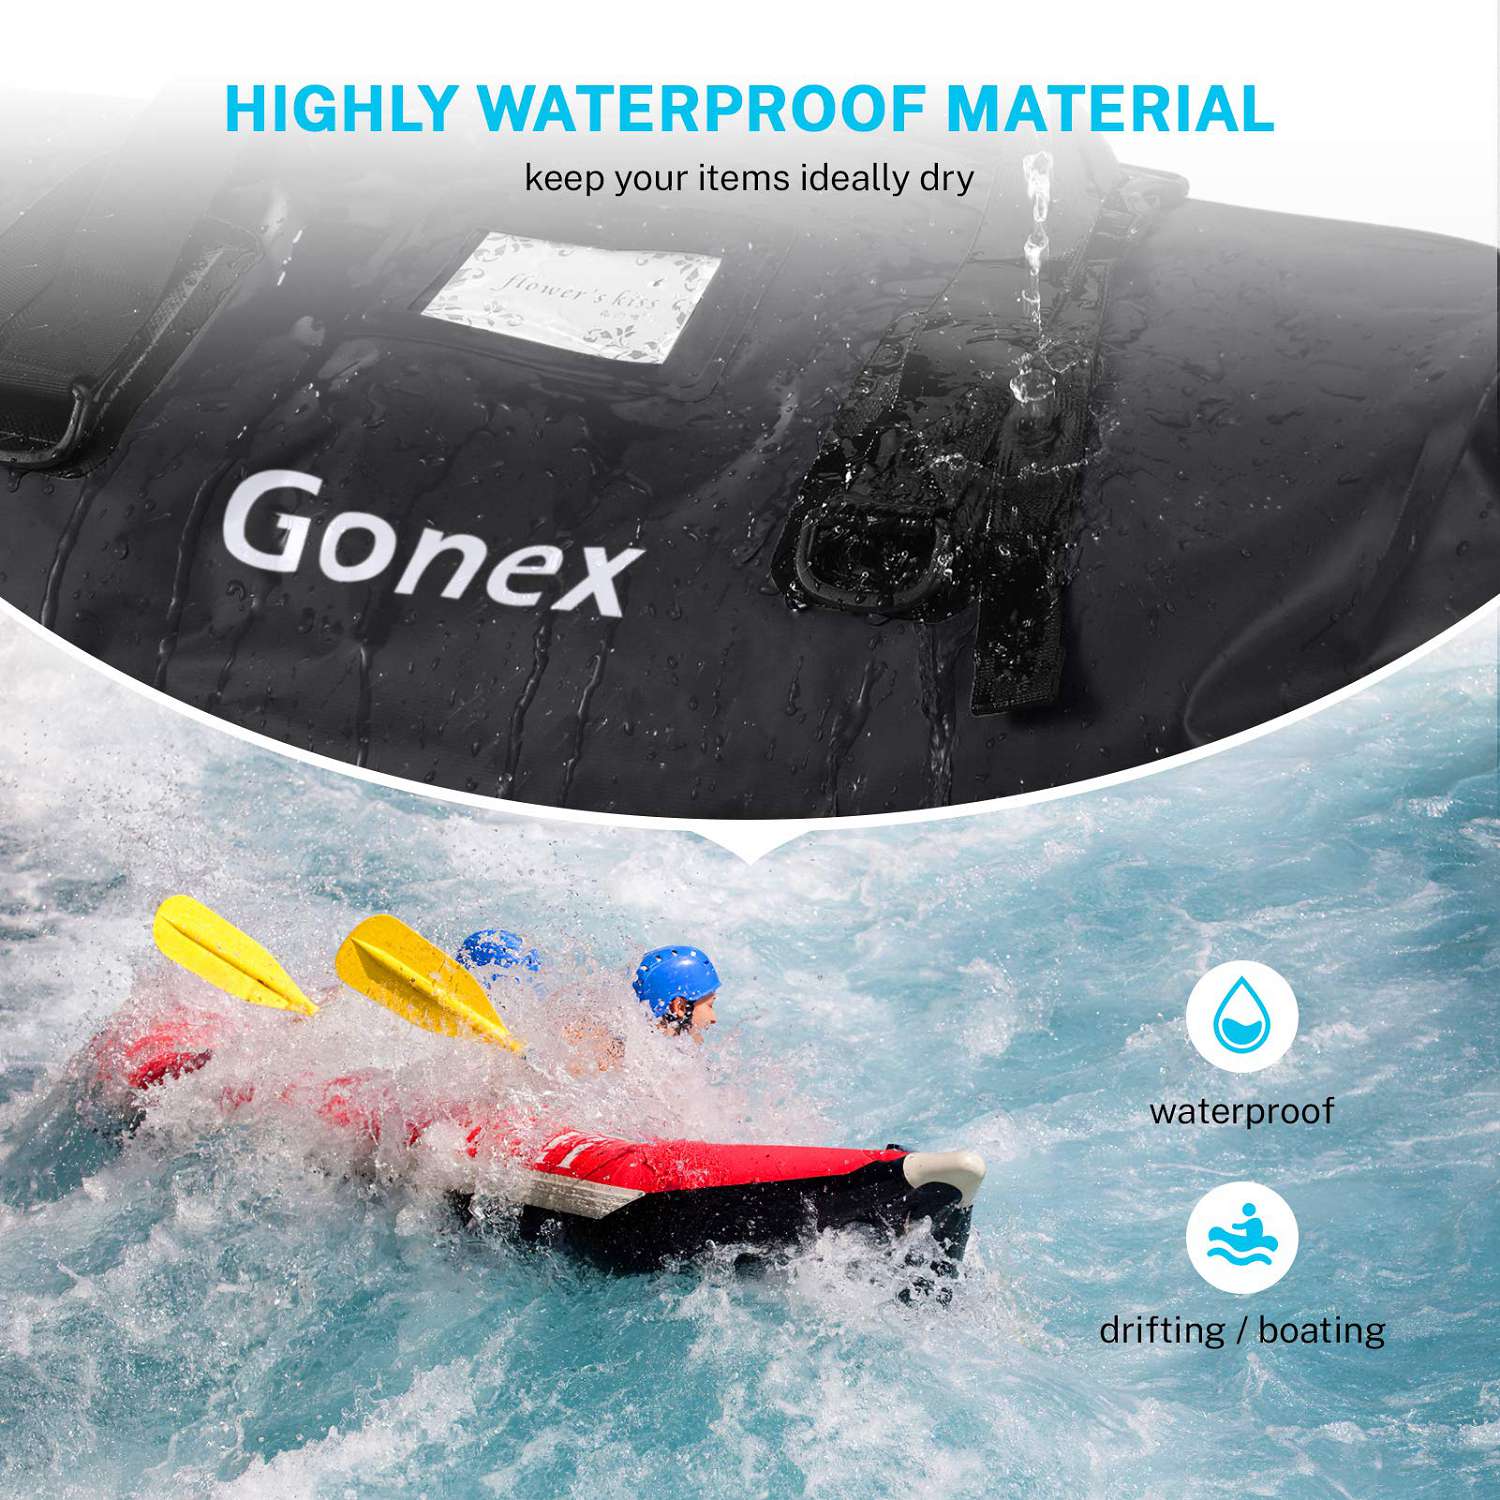 waterproof boat duffel bag